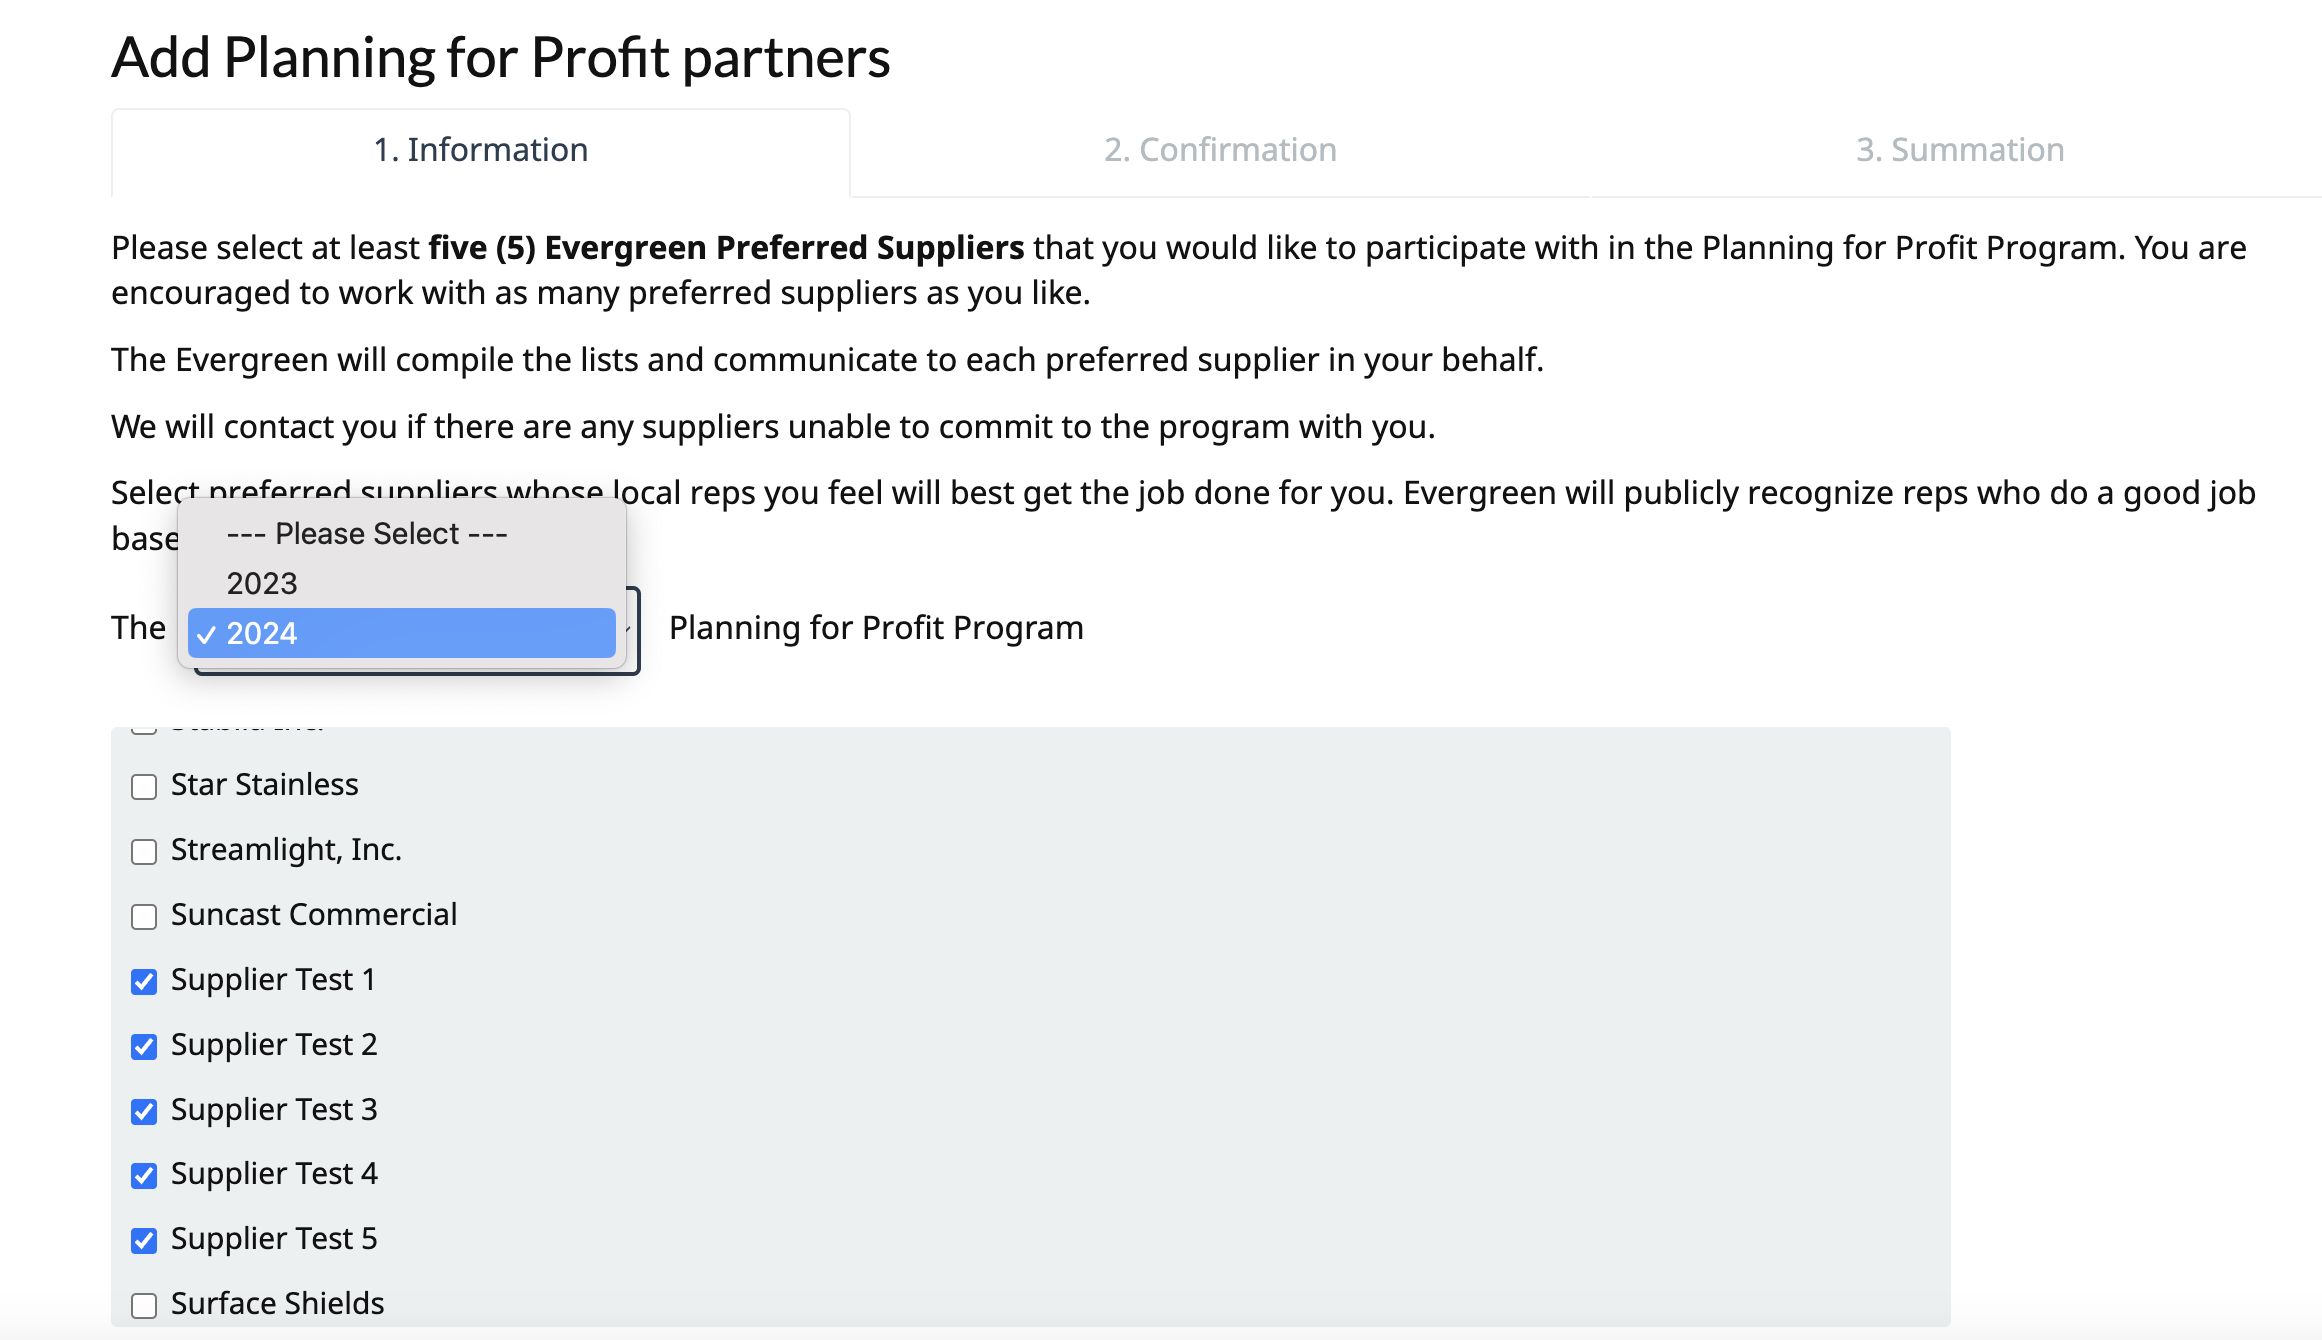 Adding P4P Partners